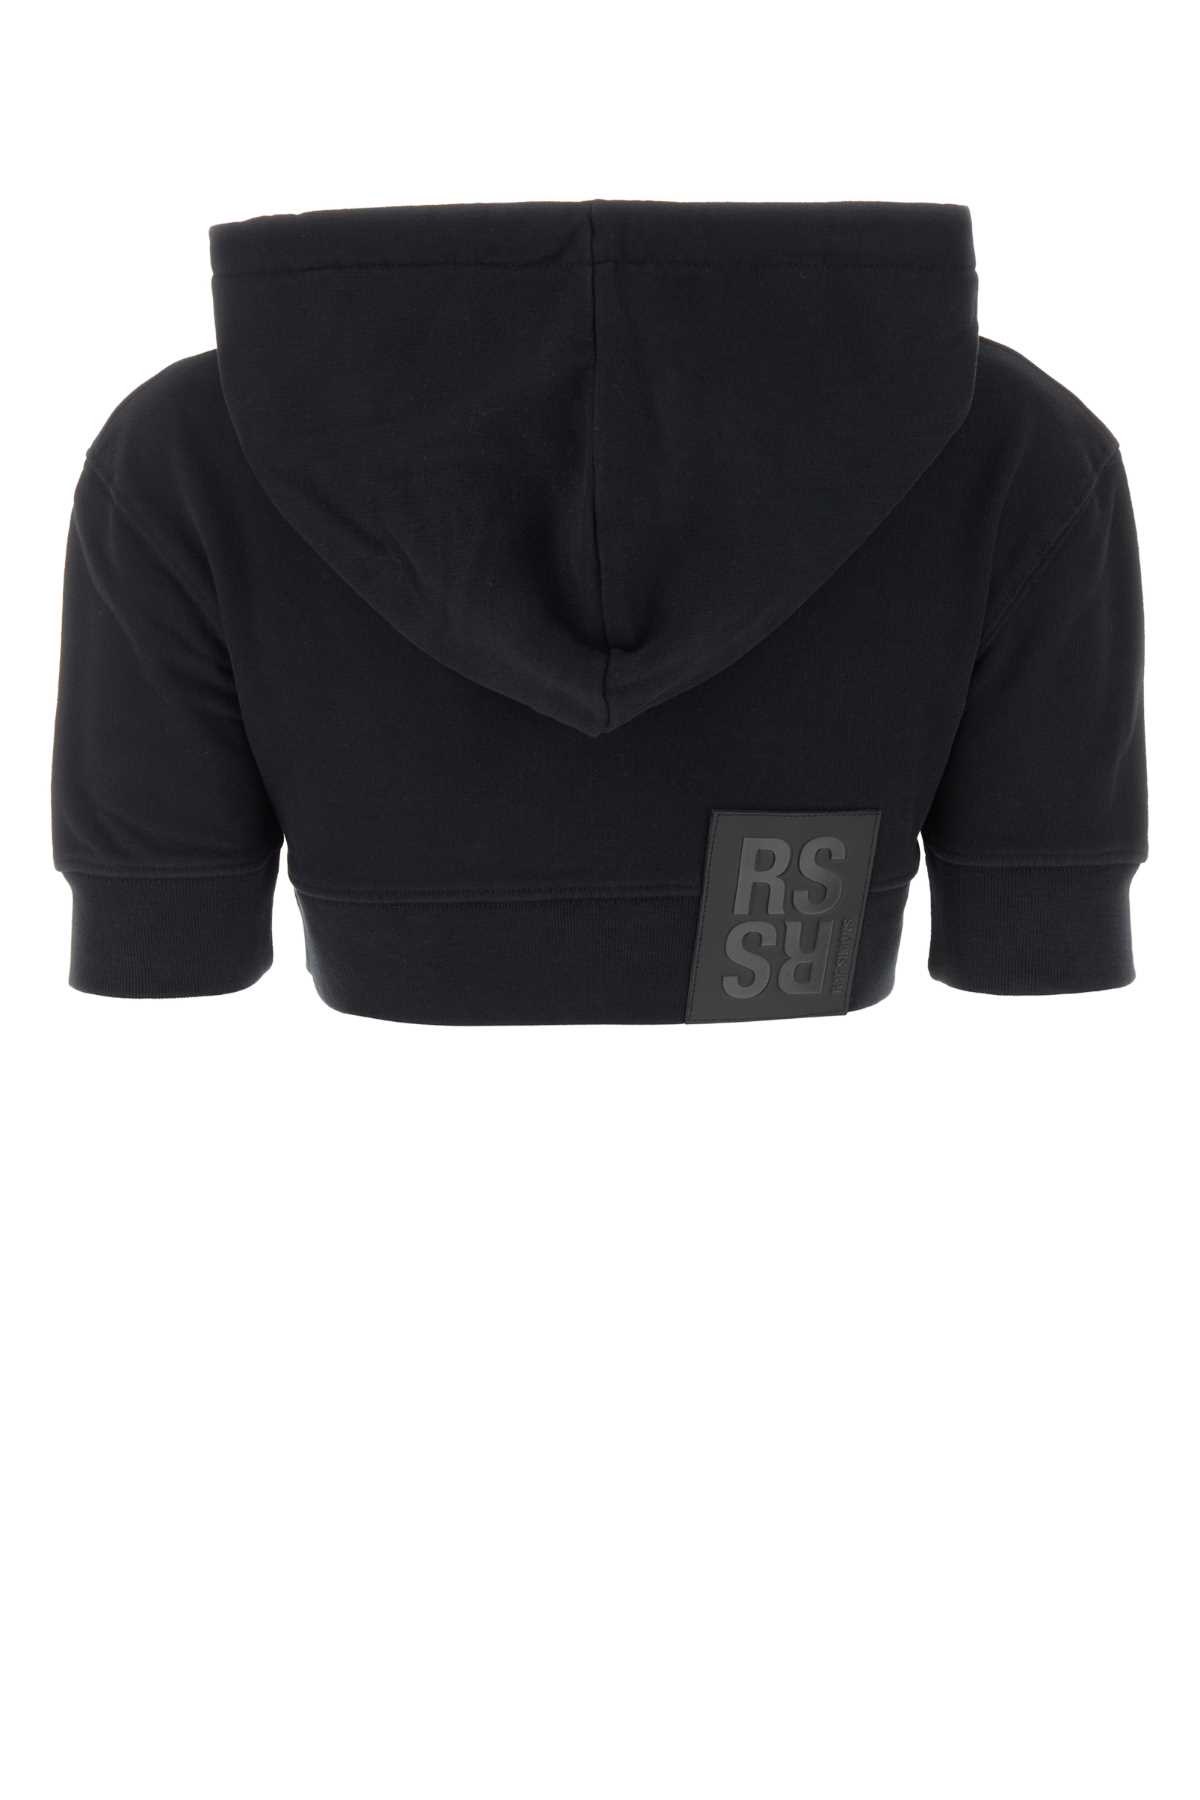 Raf Simons Black Cotton Sweatshirt In 0099